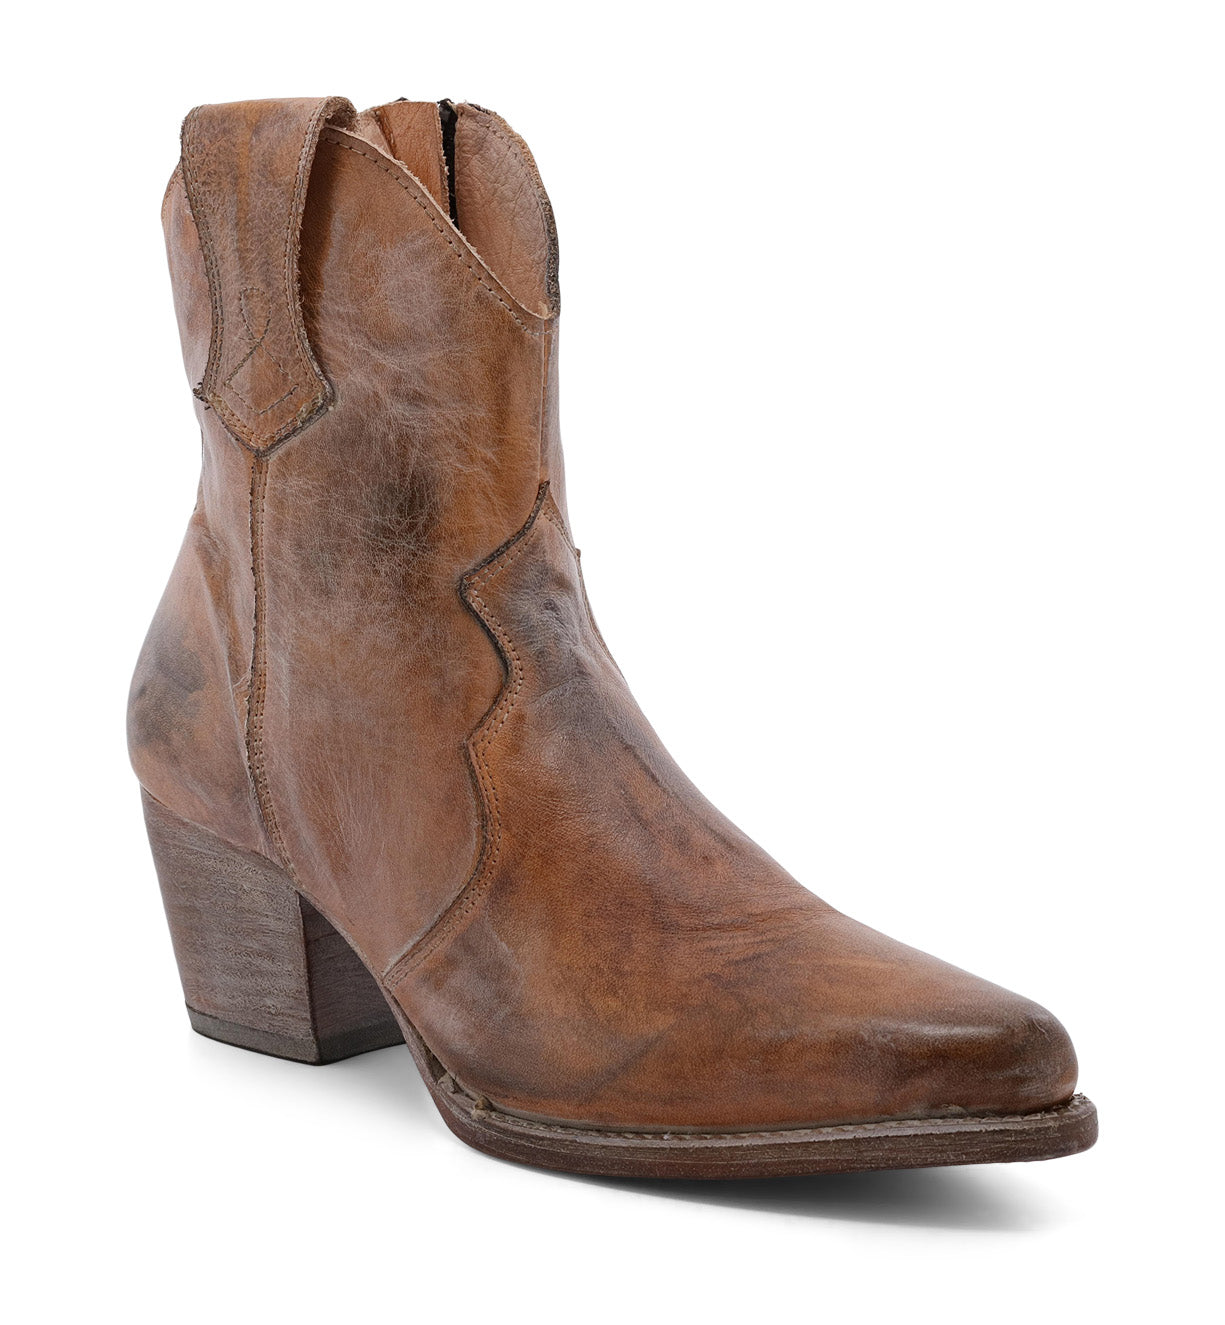 An Oak Tree Farms Baila women's tan cowboy boot with a wooden heel.